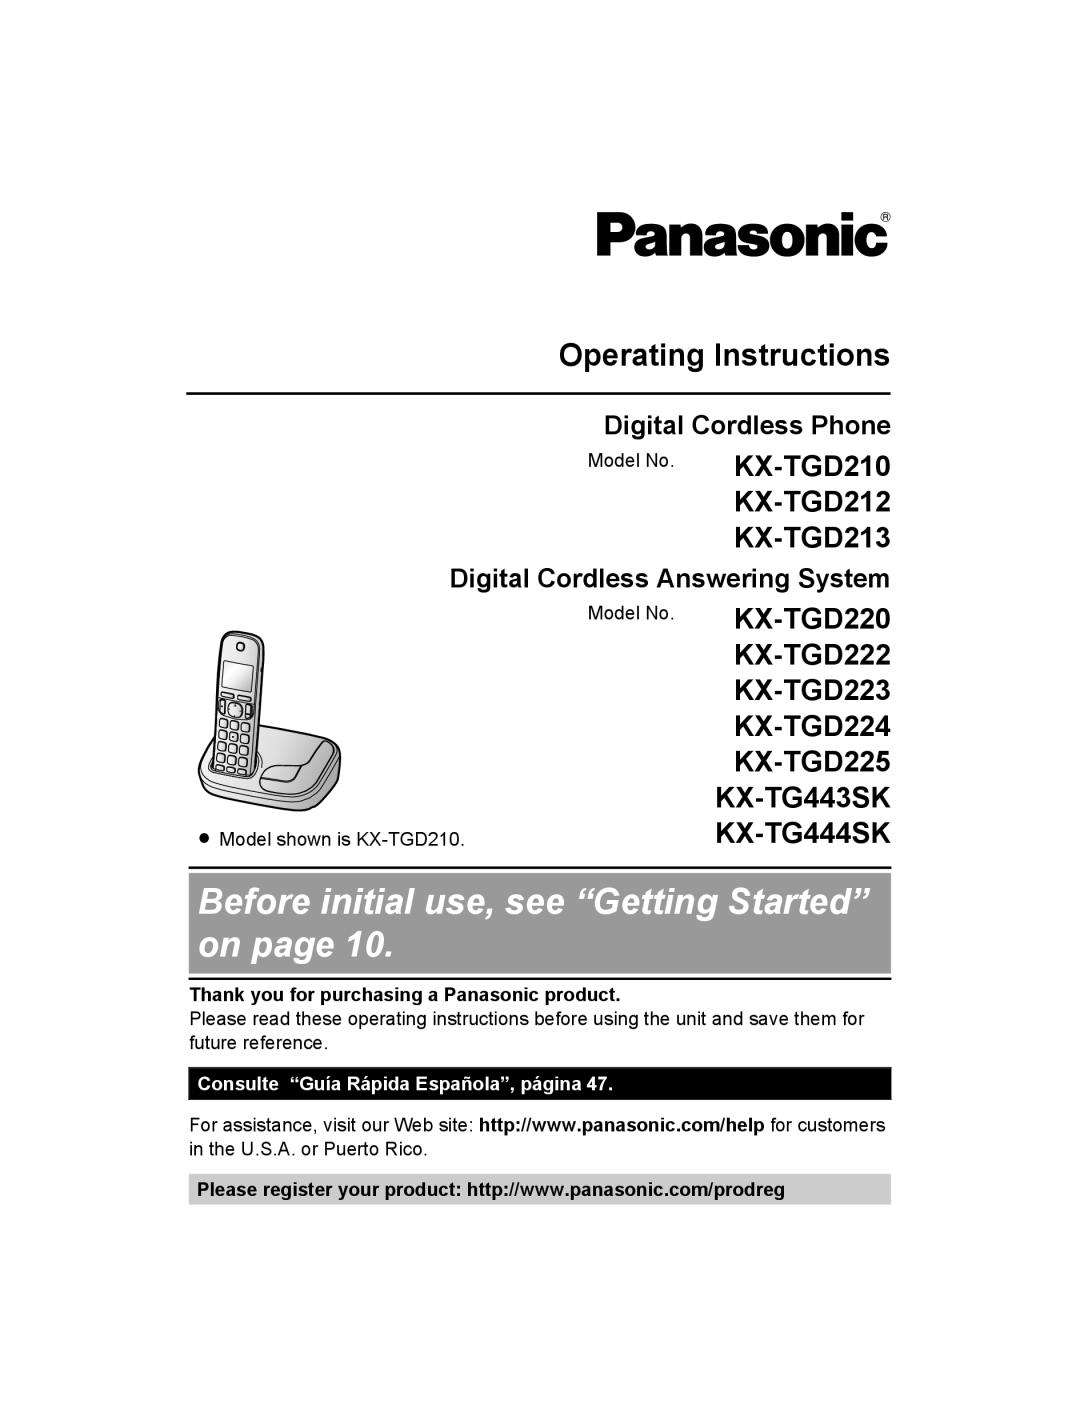 Panasonic KX-TGD220 operating instructions Operating Instructions, Digital Cordless Phone, KX-TG443SK, KX-TG444SK 